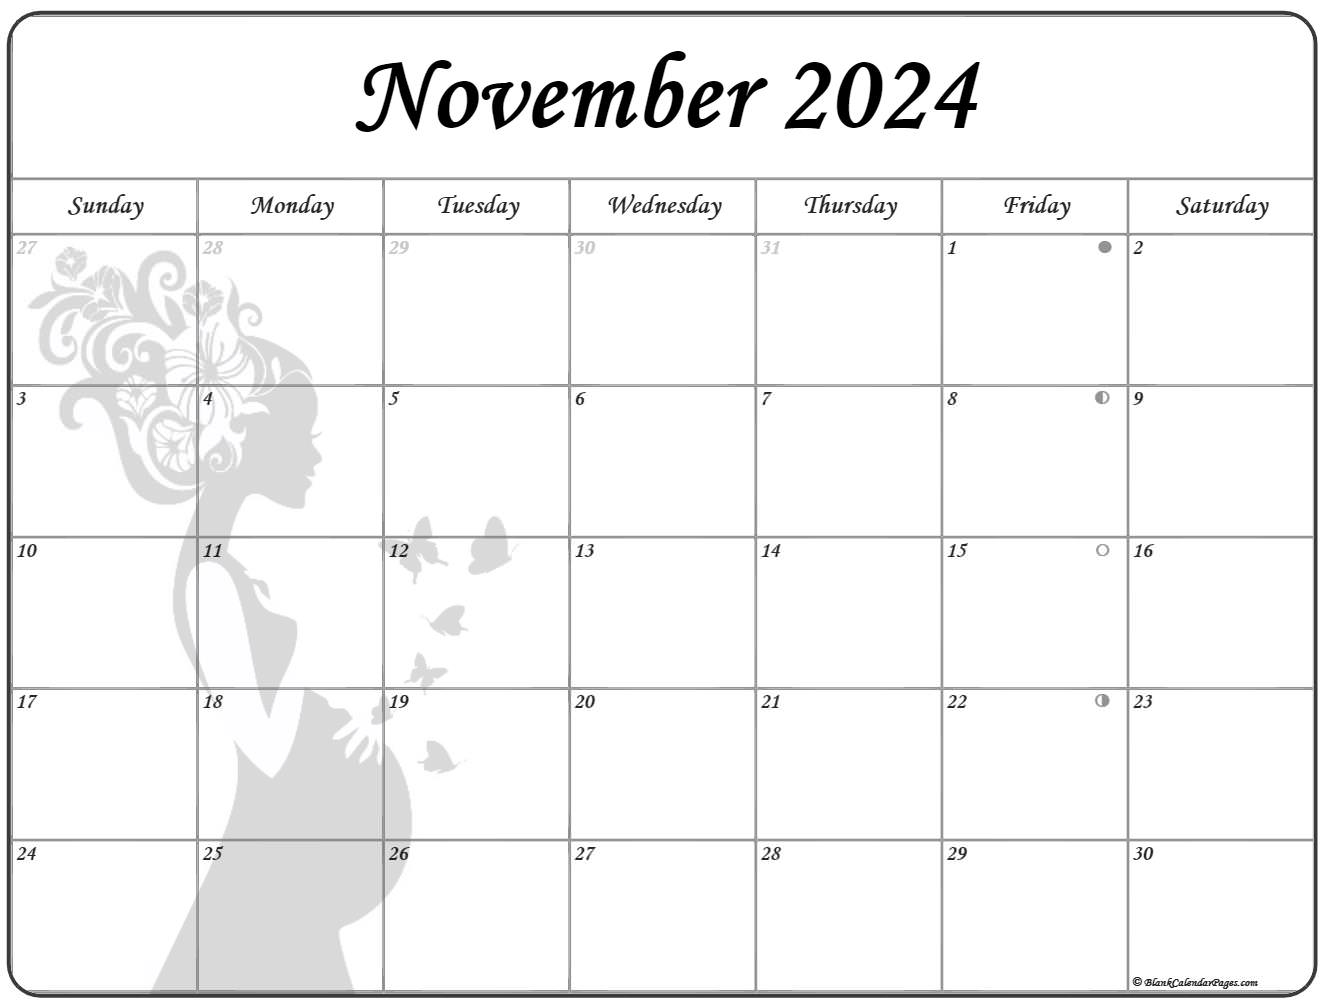 November 2021 Pregnancy Calendar | Fertility Calendar1767 x 1339